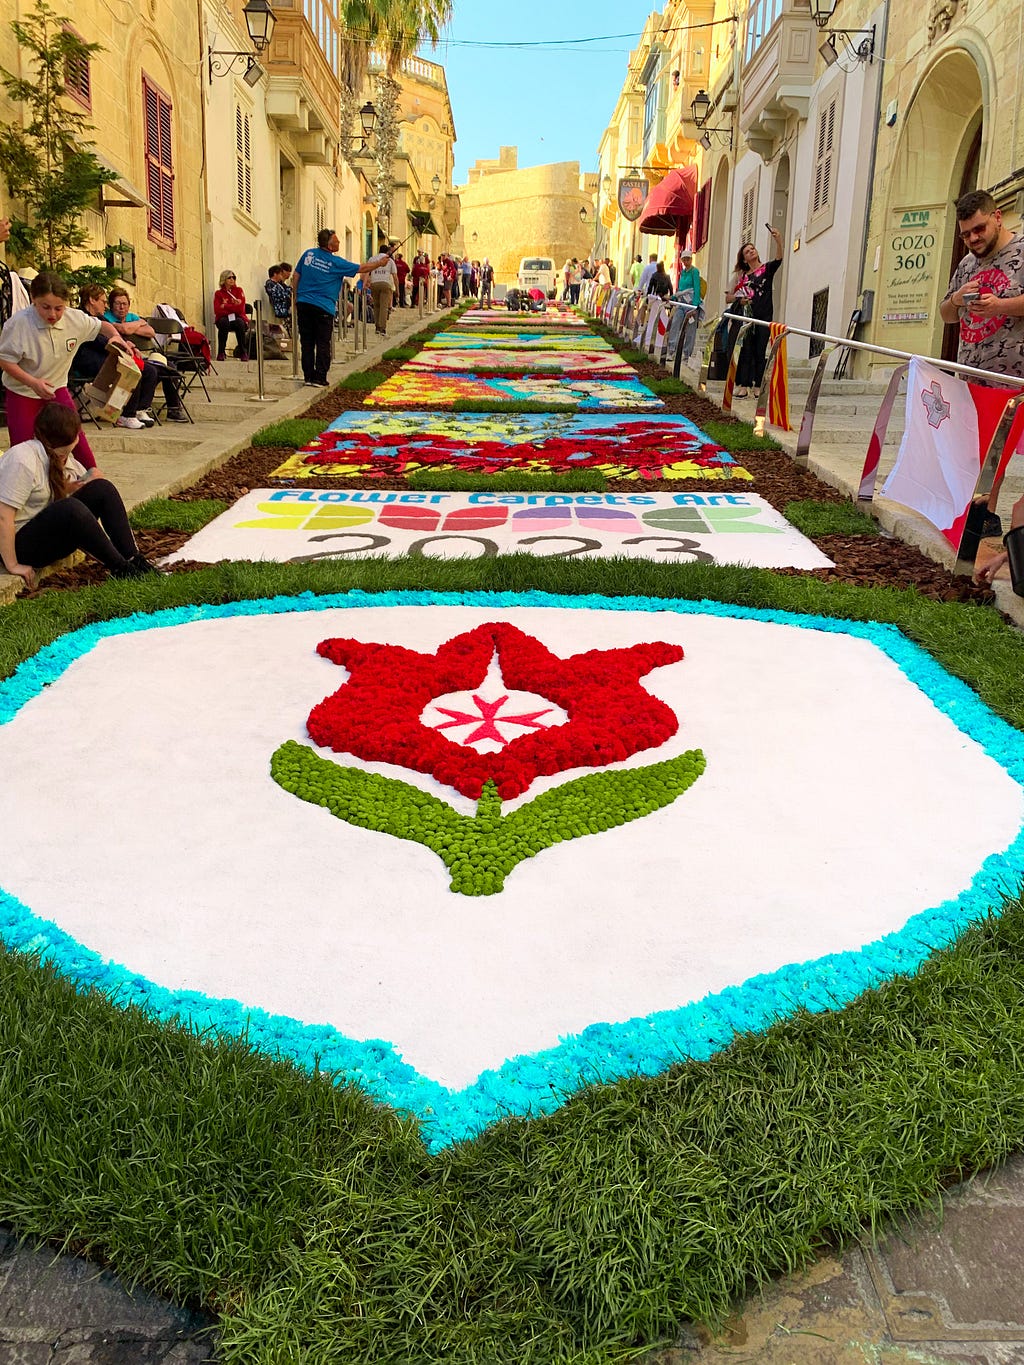 Flower carpet arts in Victoria Gozo